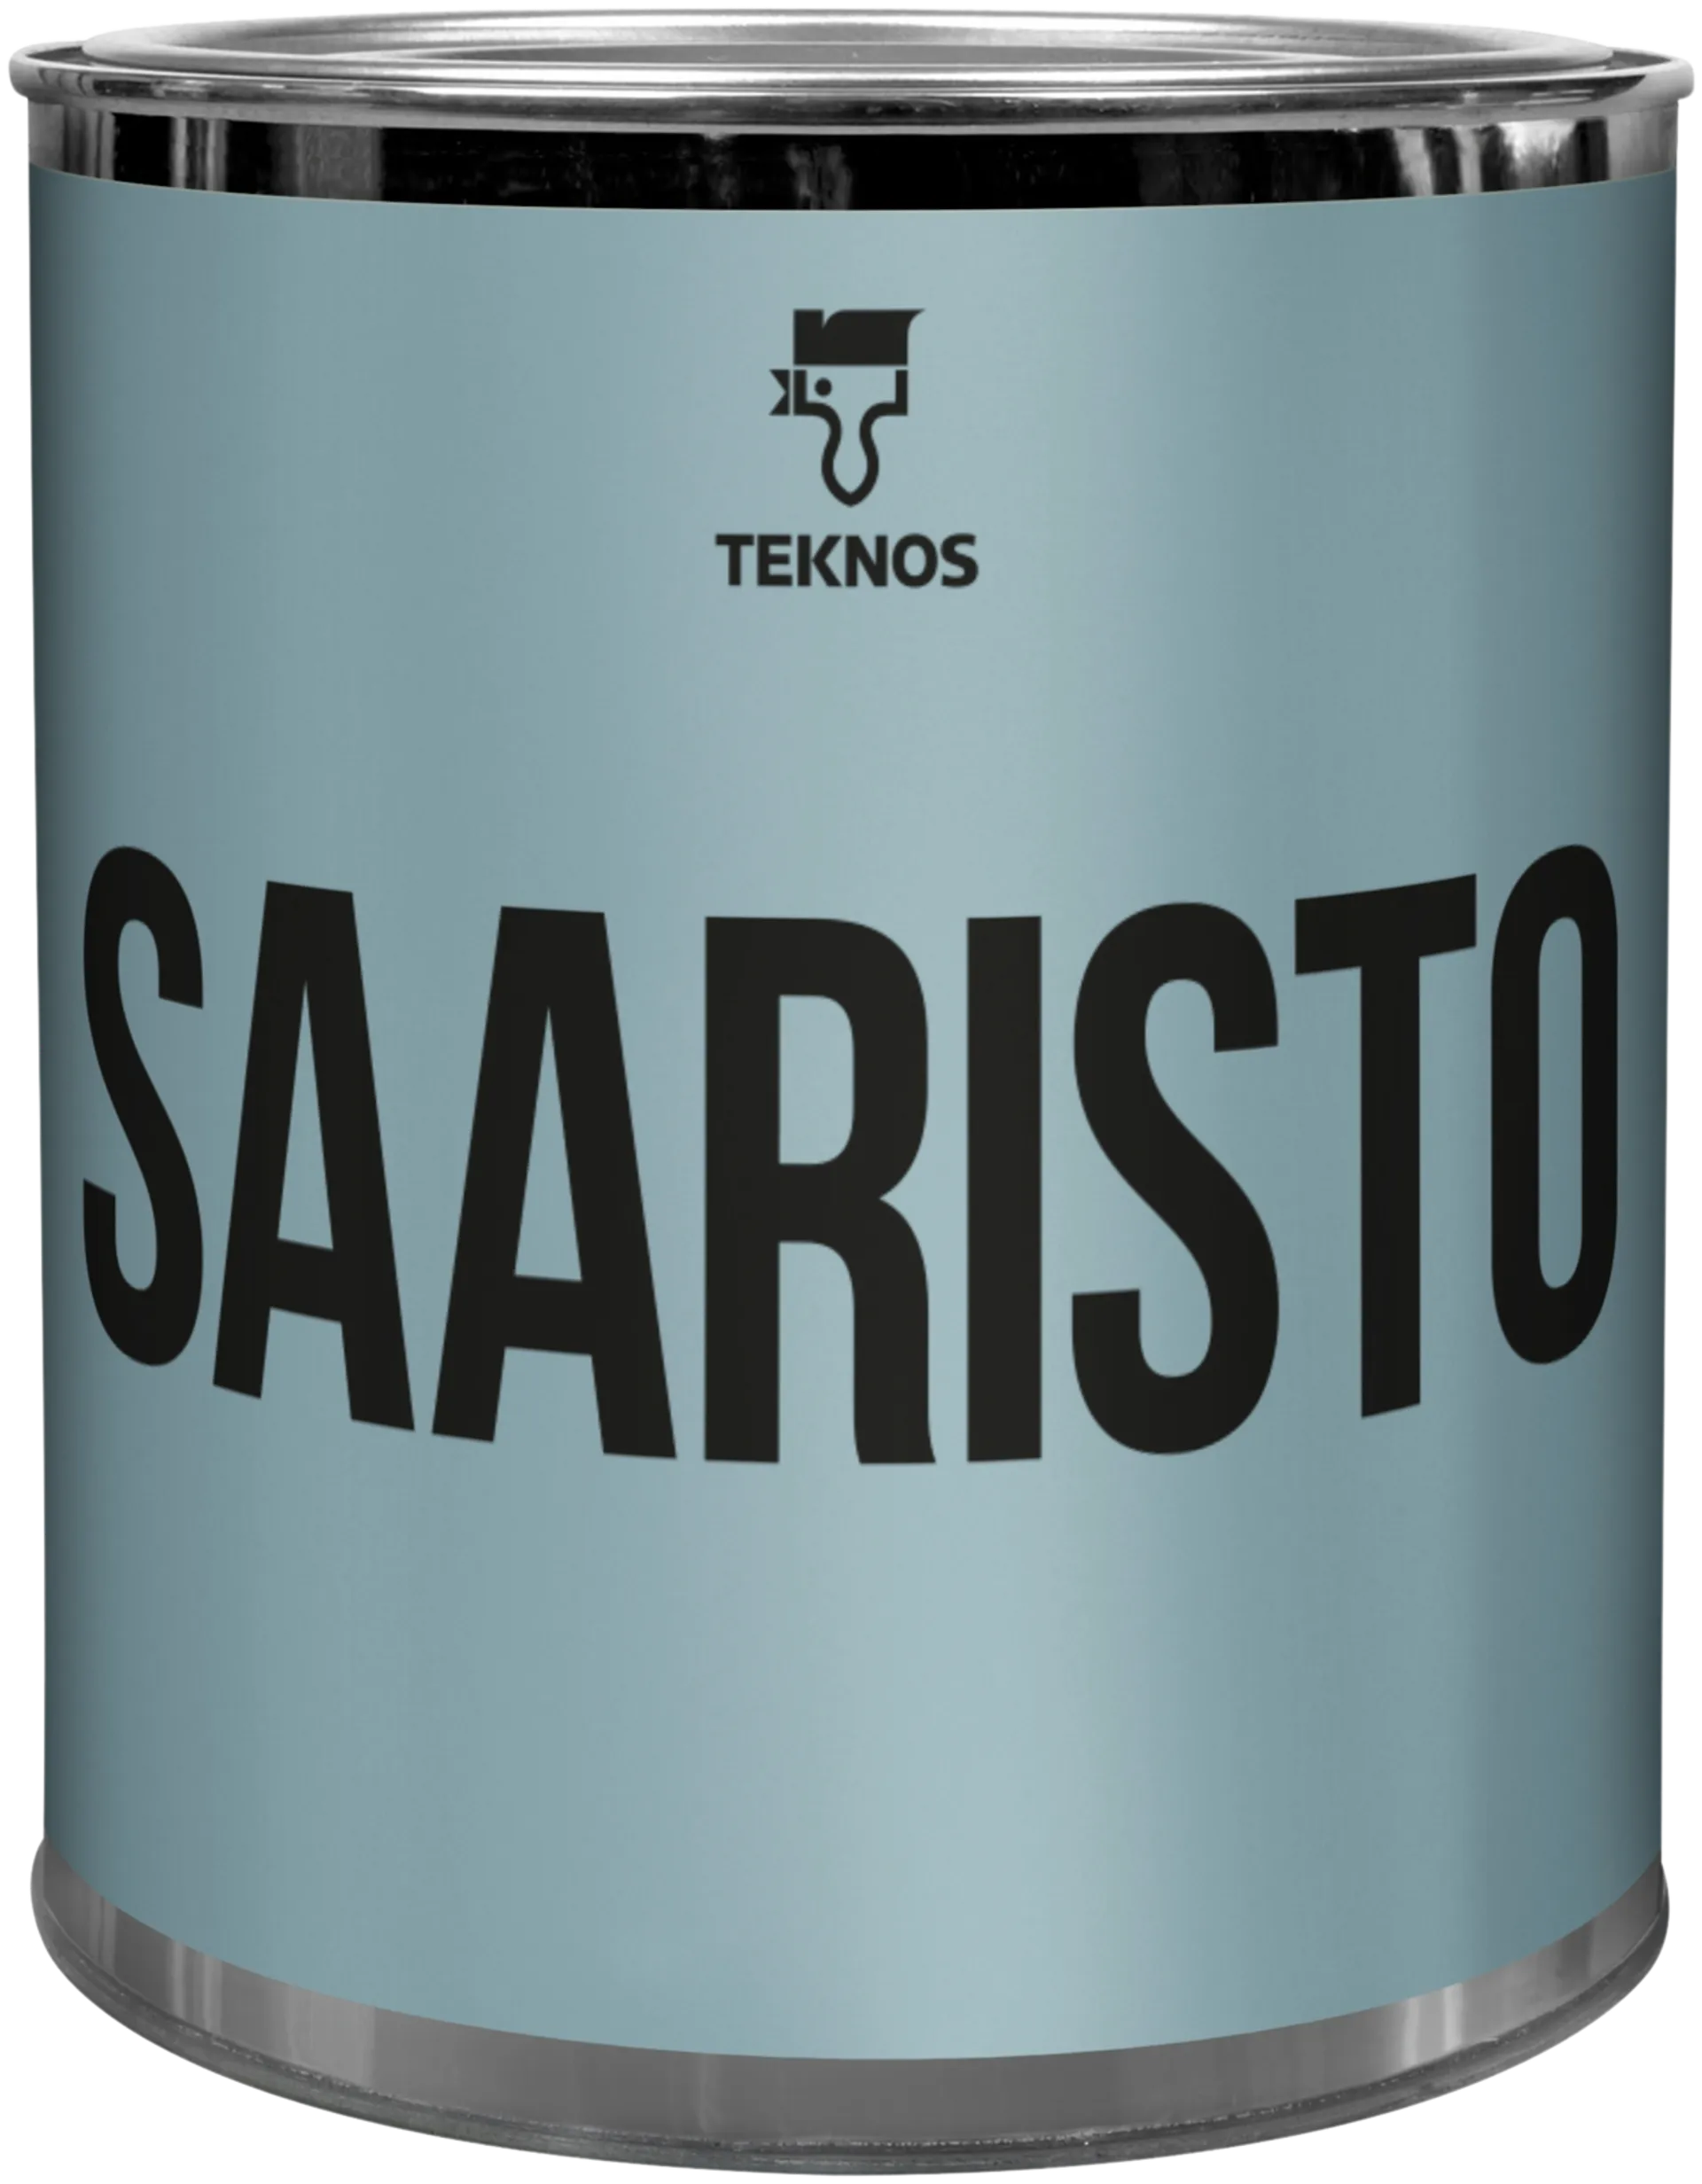 Teknos Colour sample Saaristo T1437